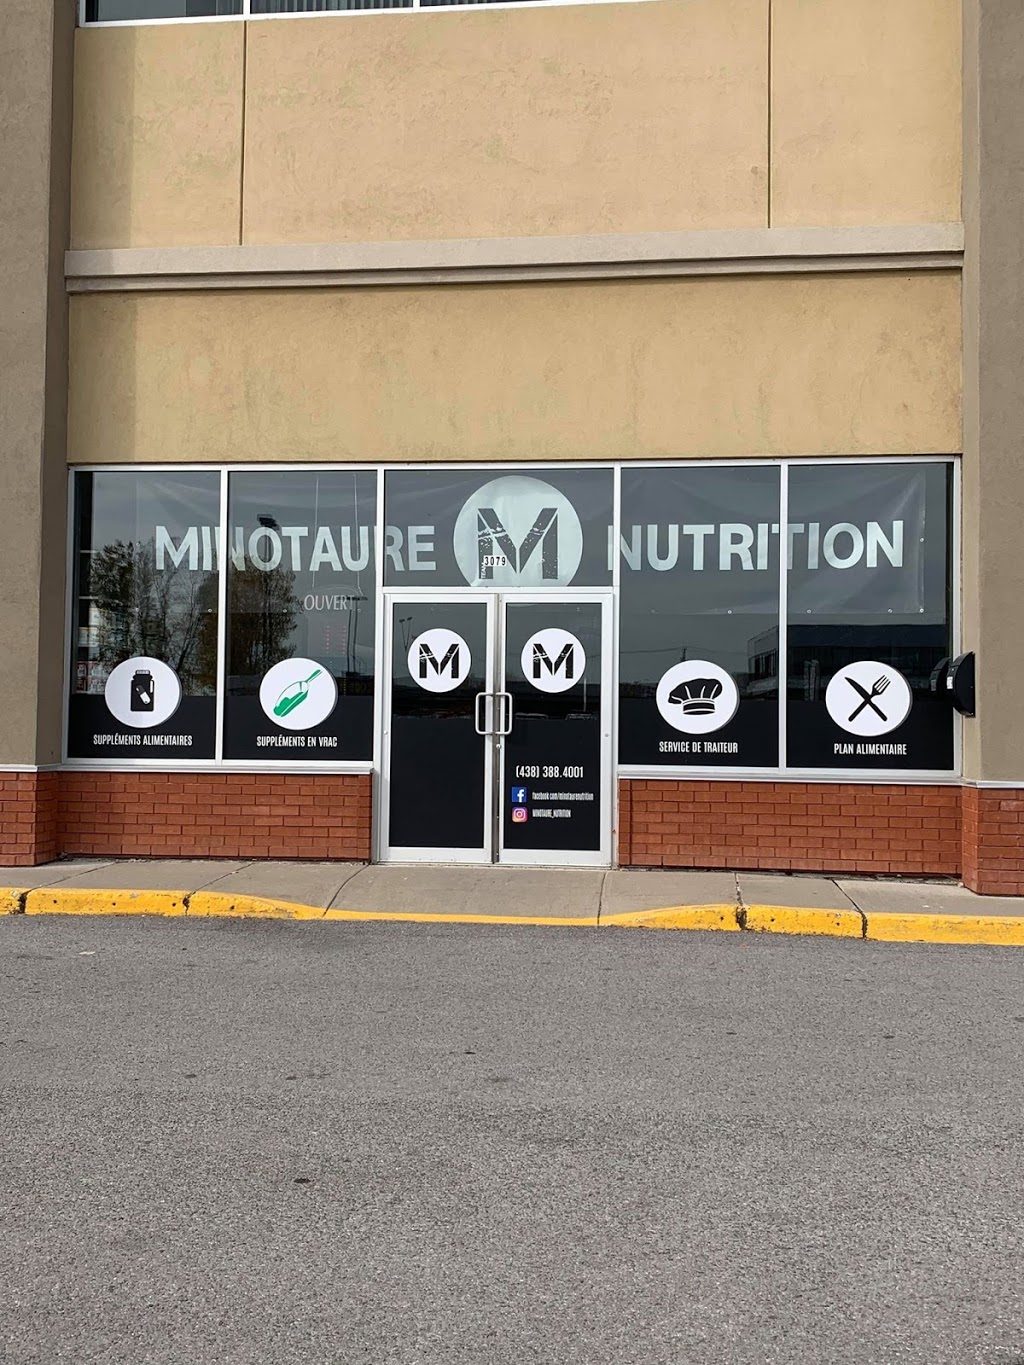 Minotaure Nutrition Mascouche | health | 3079 Boulevard de Mascouche, Mascouche, QC J7K 3B7, Canada | 4383884001 OR +1 438-388-4001